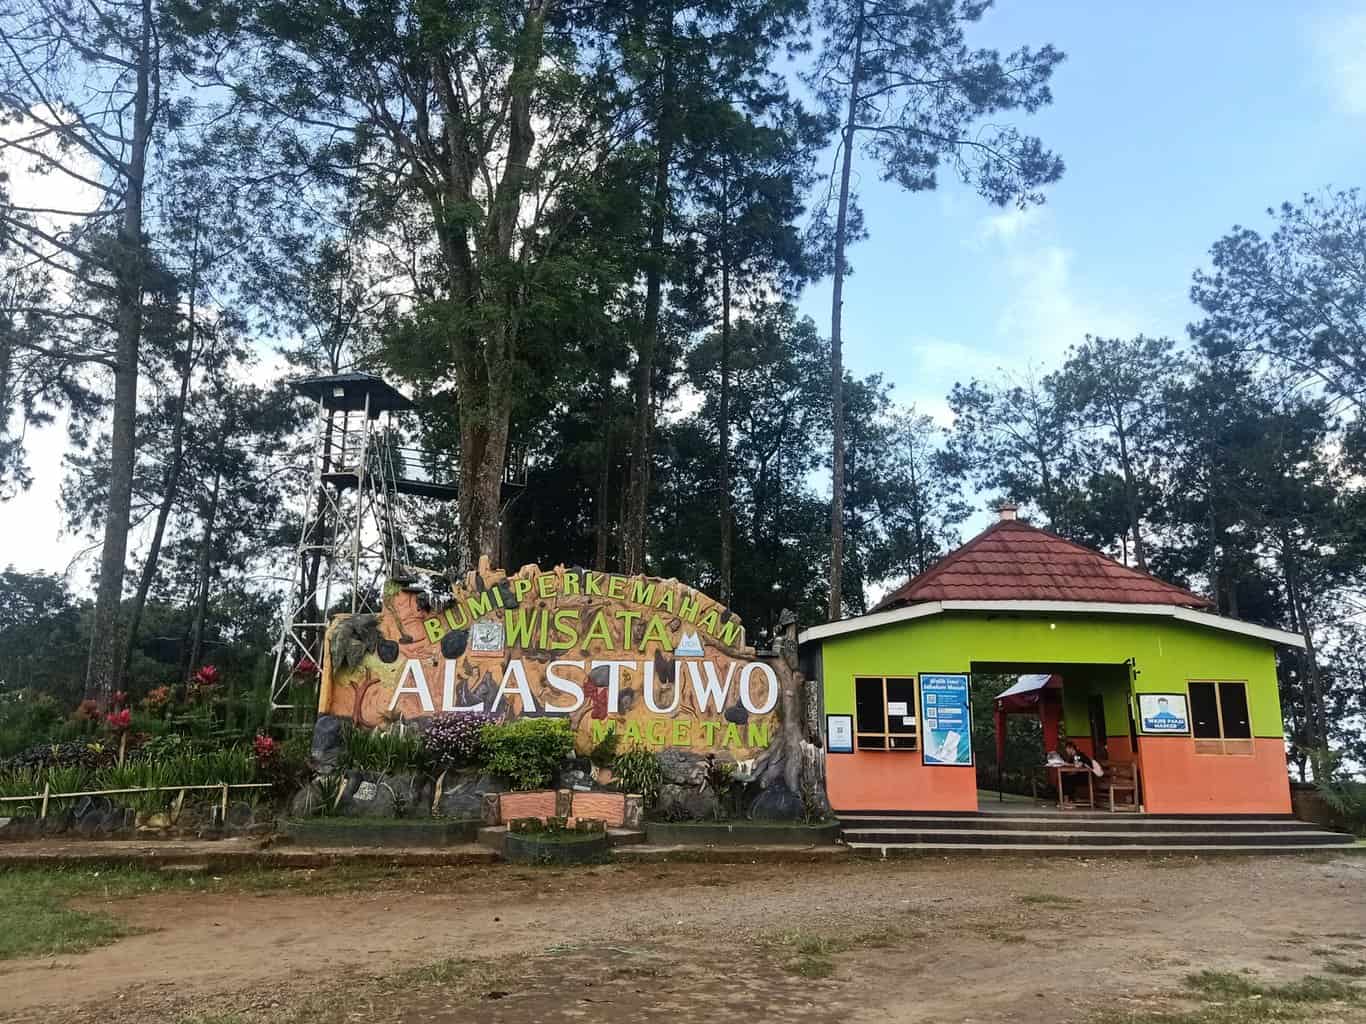 alastuwo campground